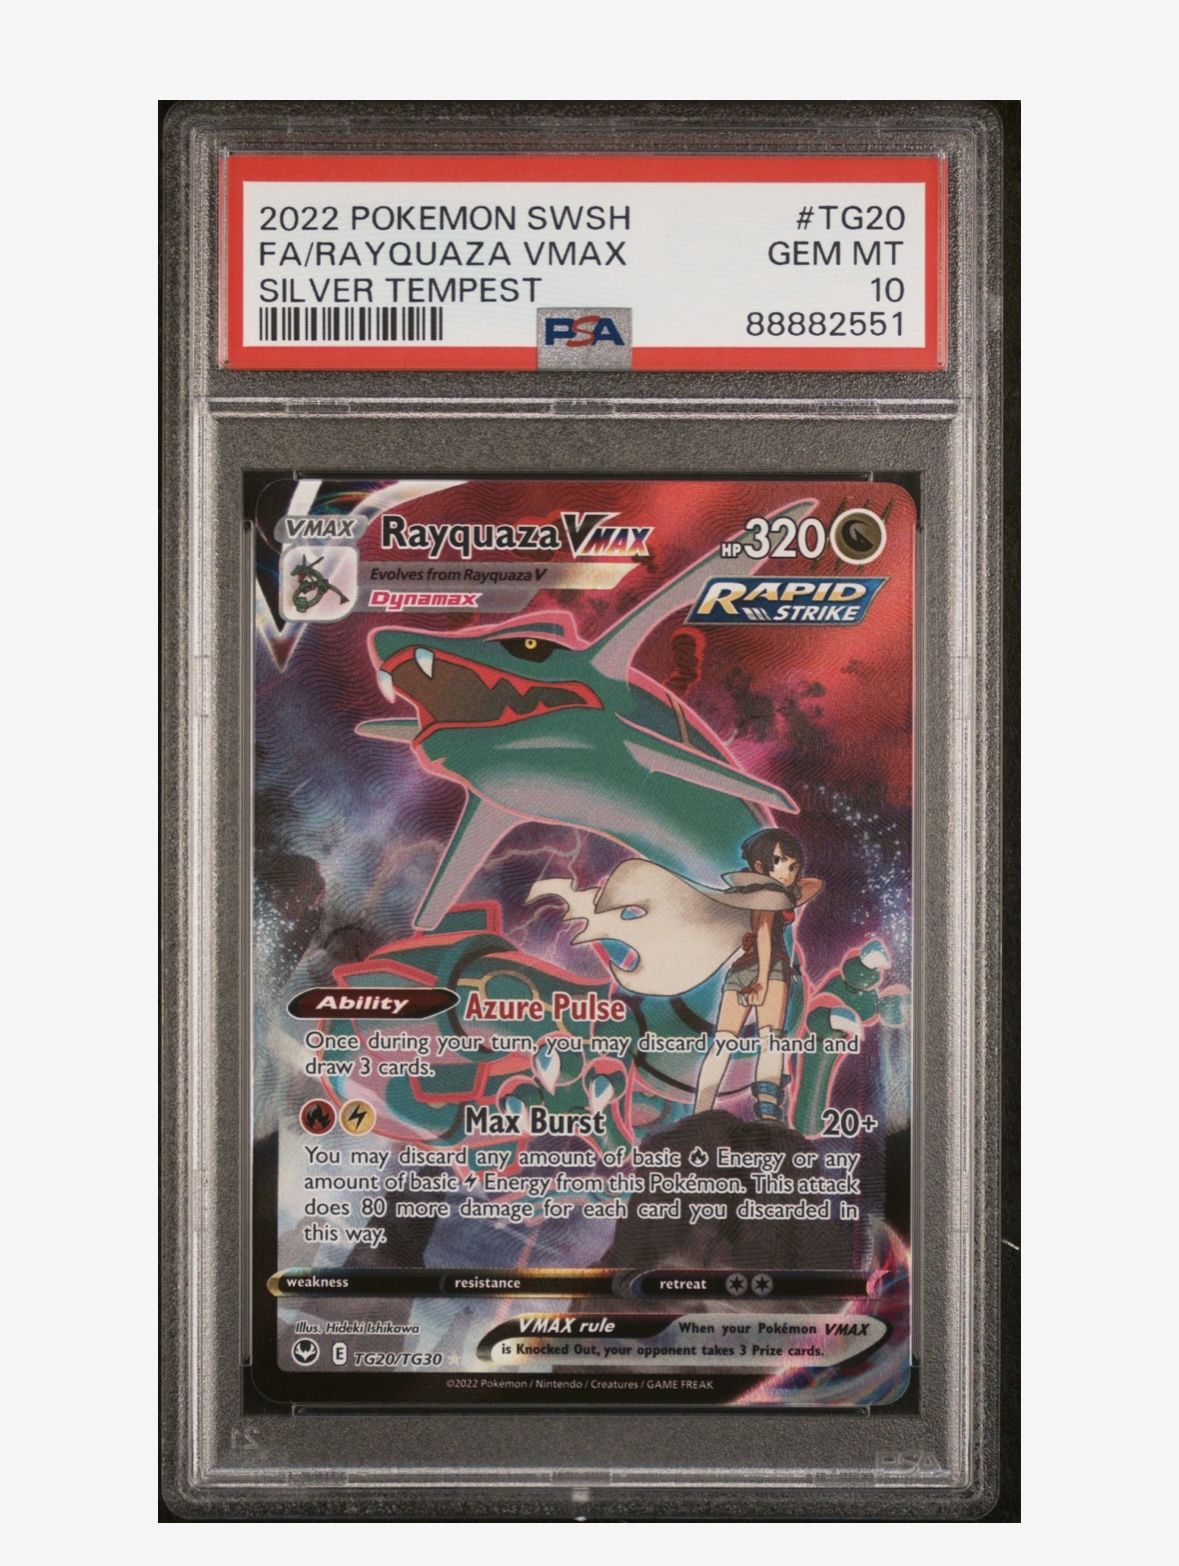 Rayquaza VMAX PSA 10 English Pokemon Card TG20/TG30 Silver Tempest 2022